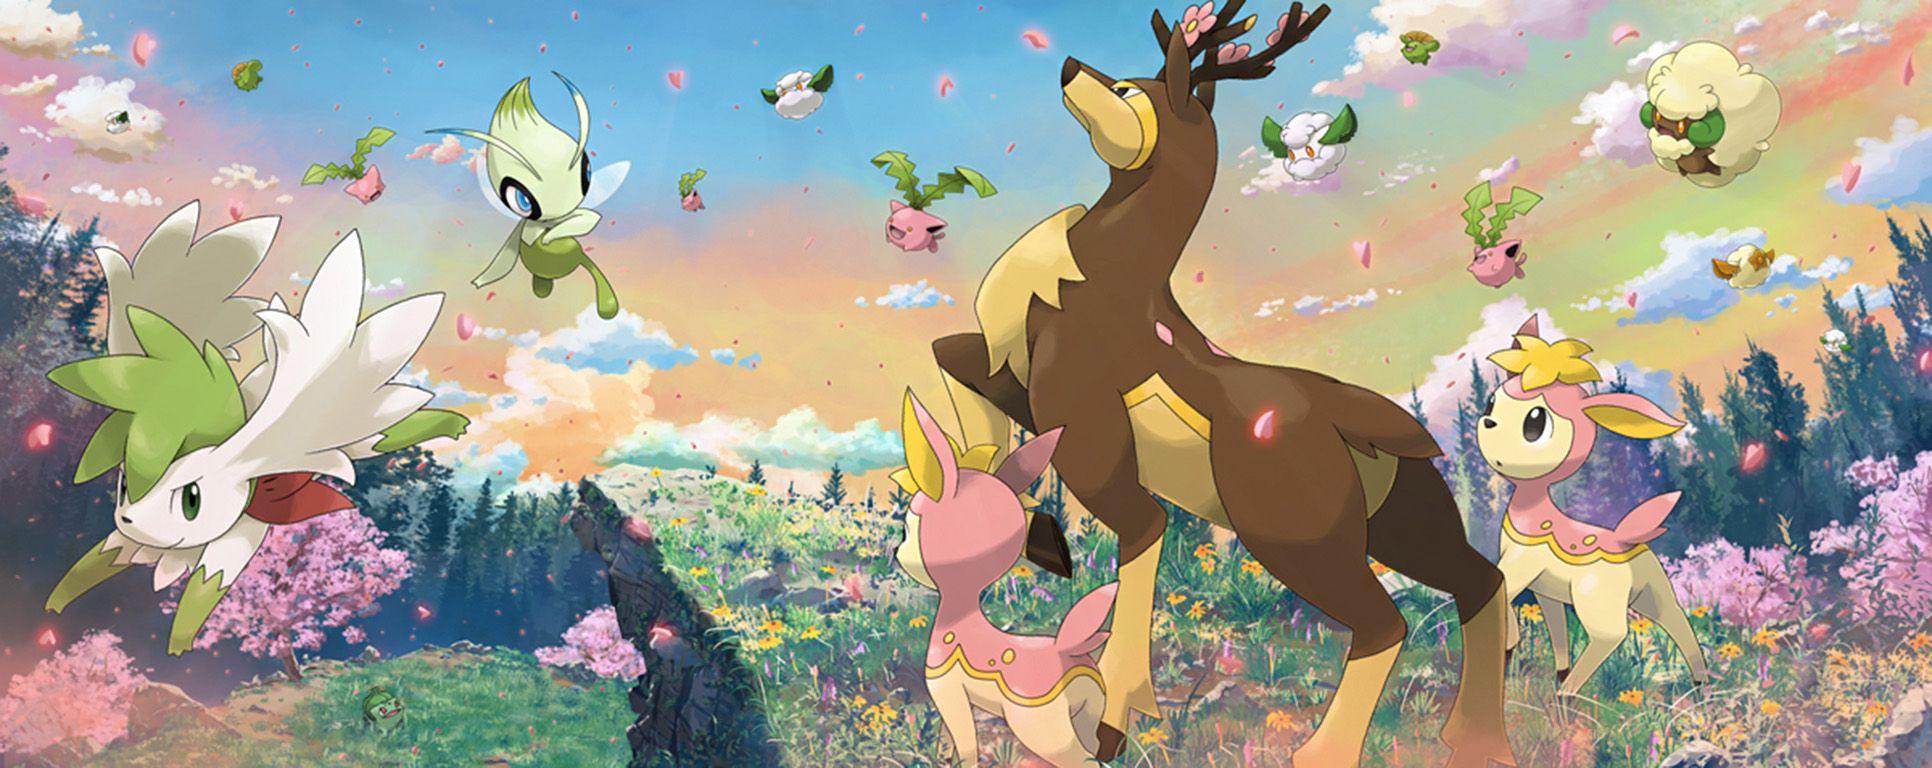 Sawsbuck (Pokémon) HD Wallpaper and Background Image